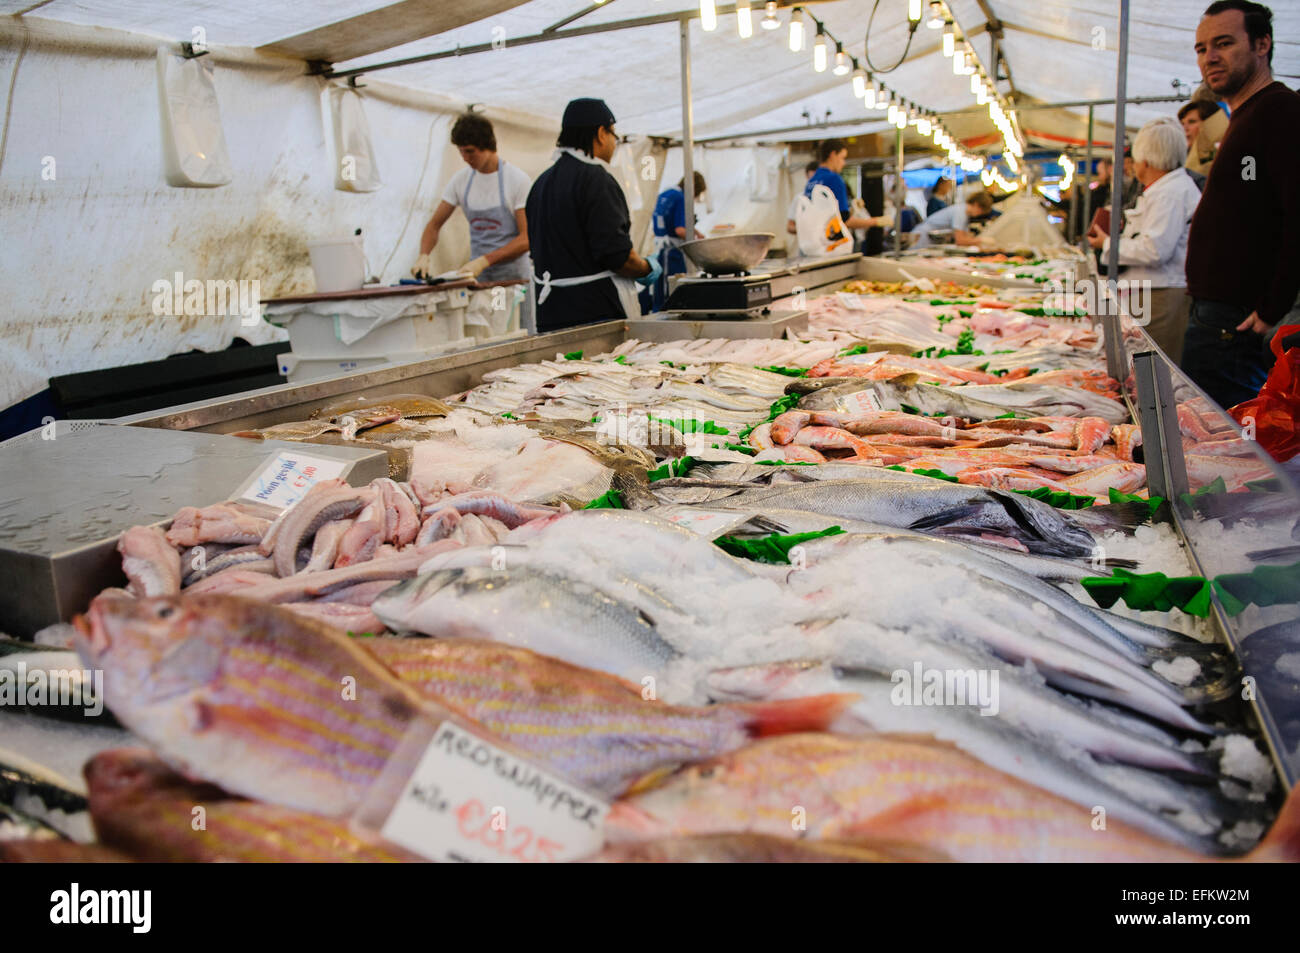 Fish Market In Amsterdam Netherlands Immagini e Fotos Stock - Alamy